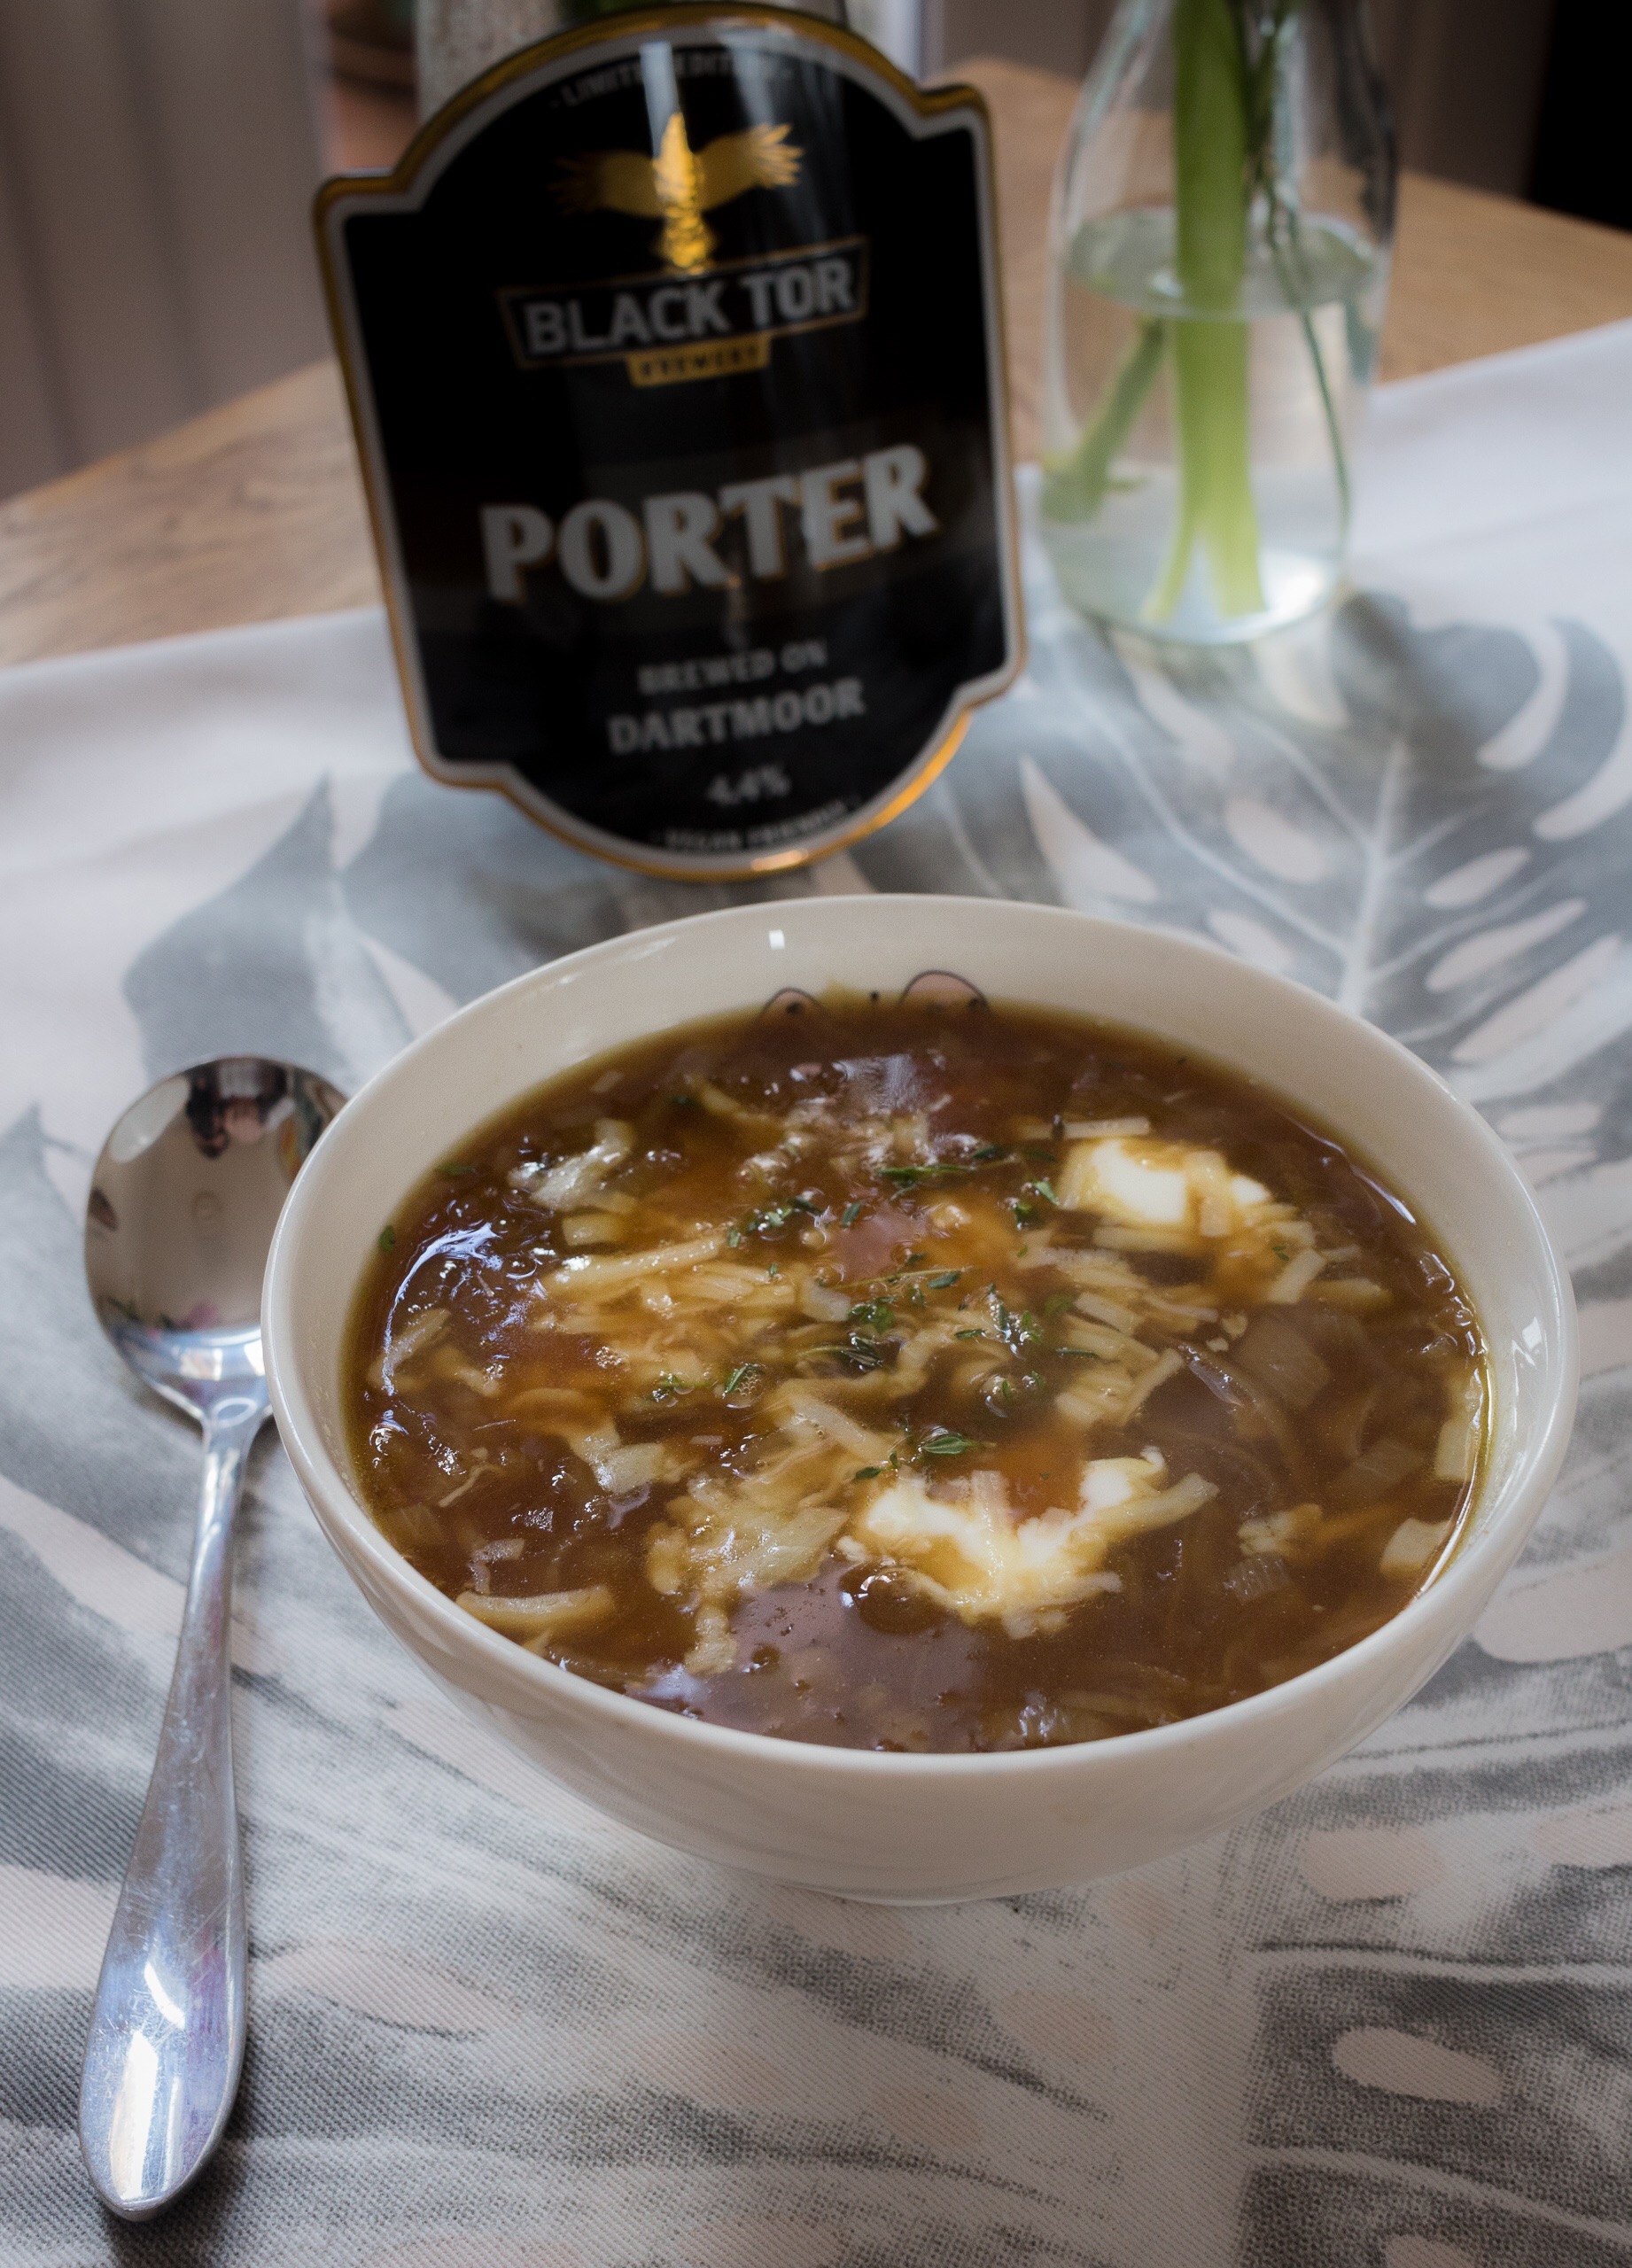 Black Tor Porter Onion Soup